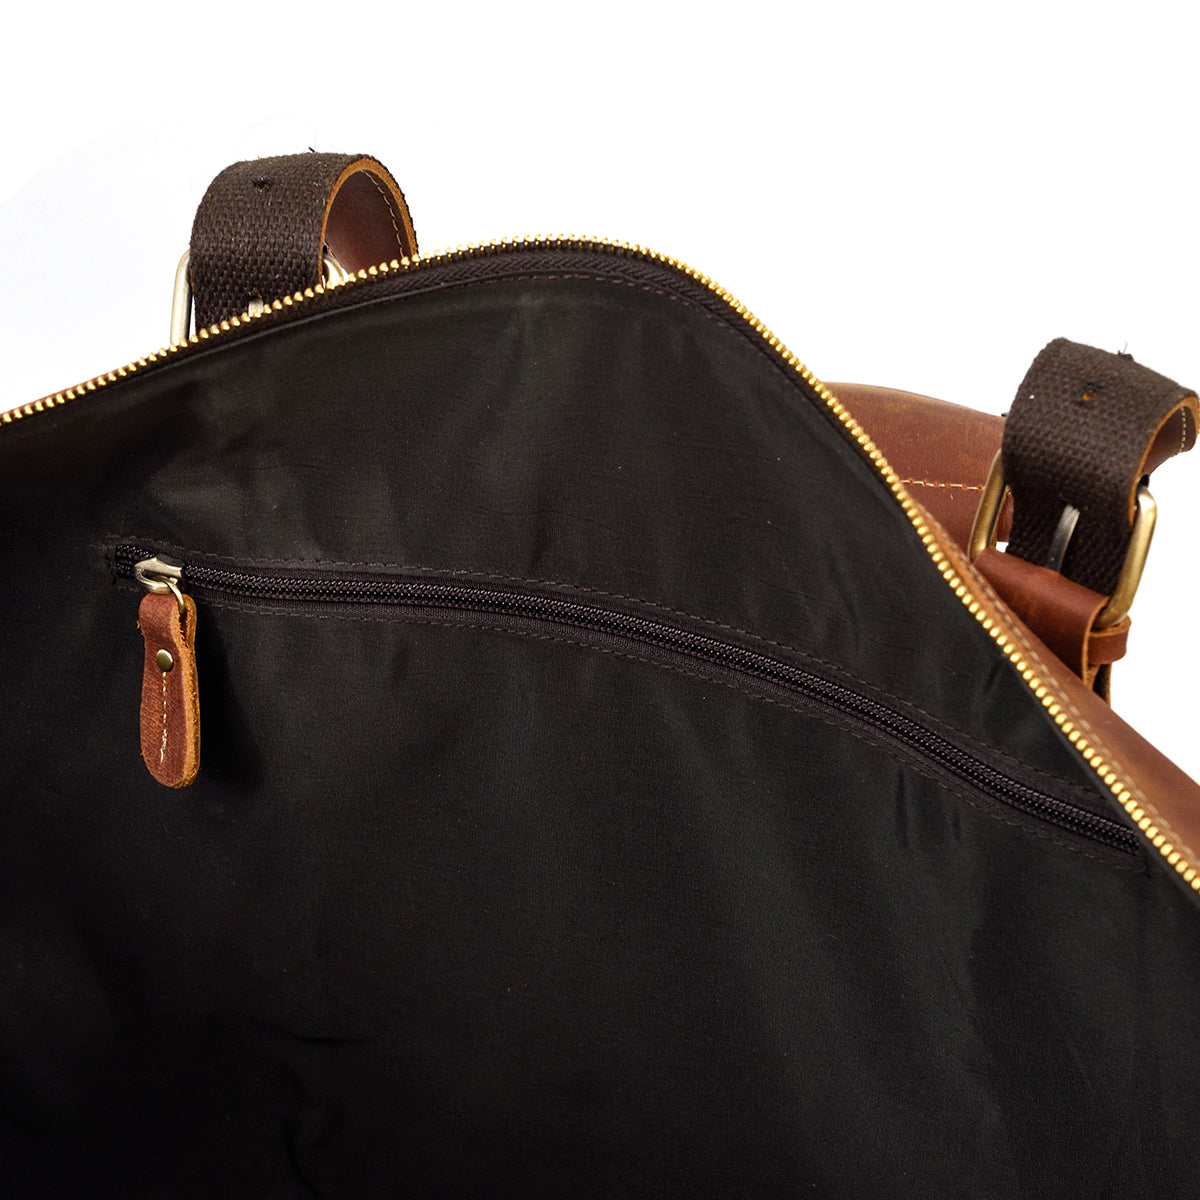 sturdy Leather Travel Bag